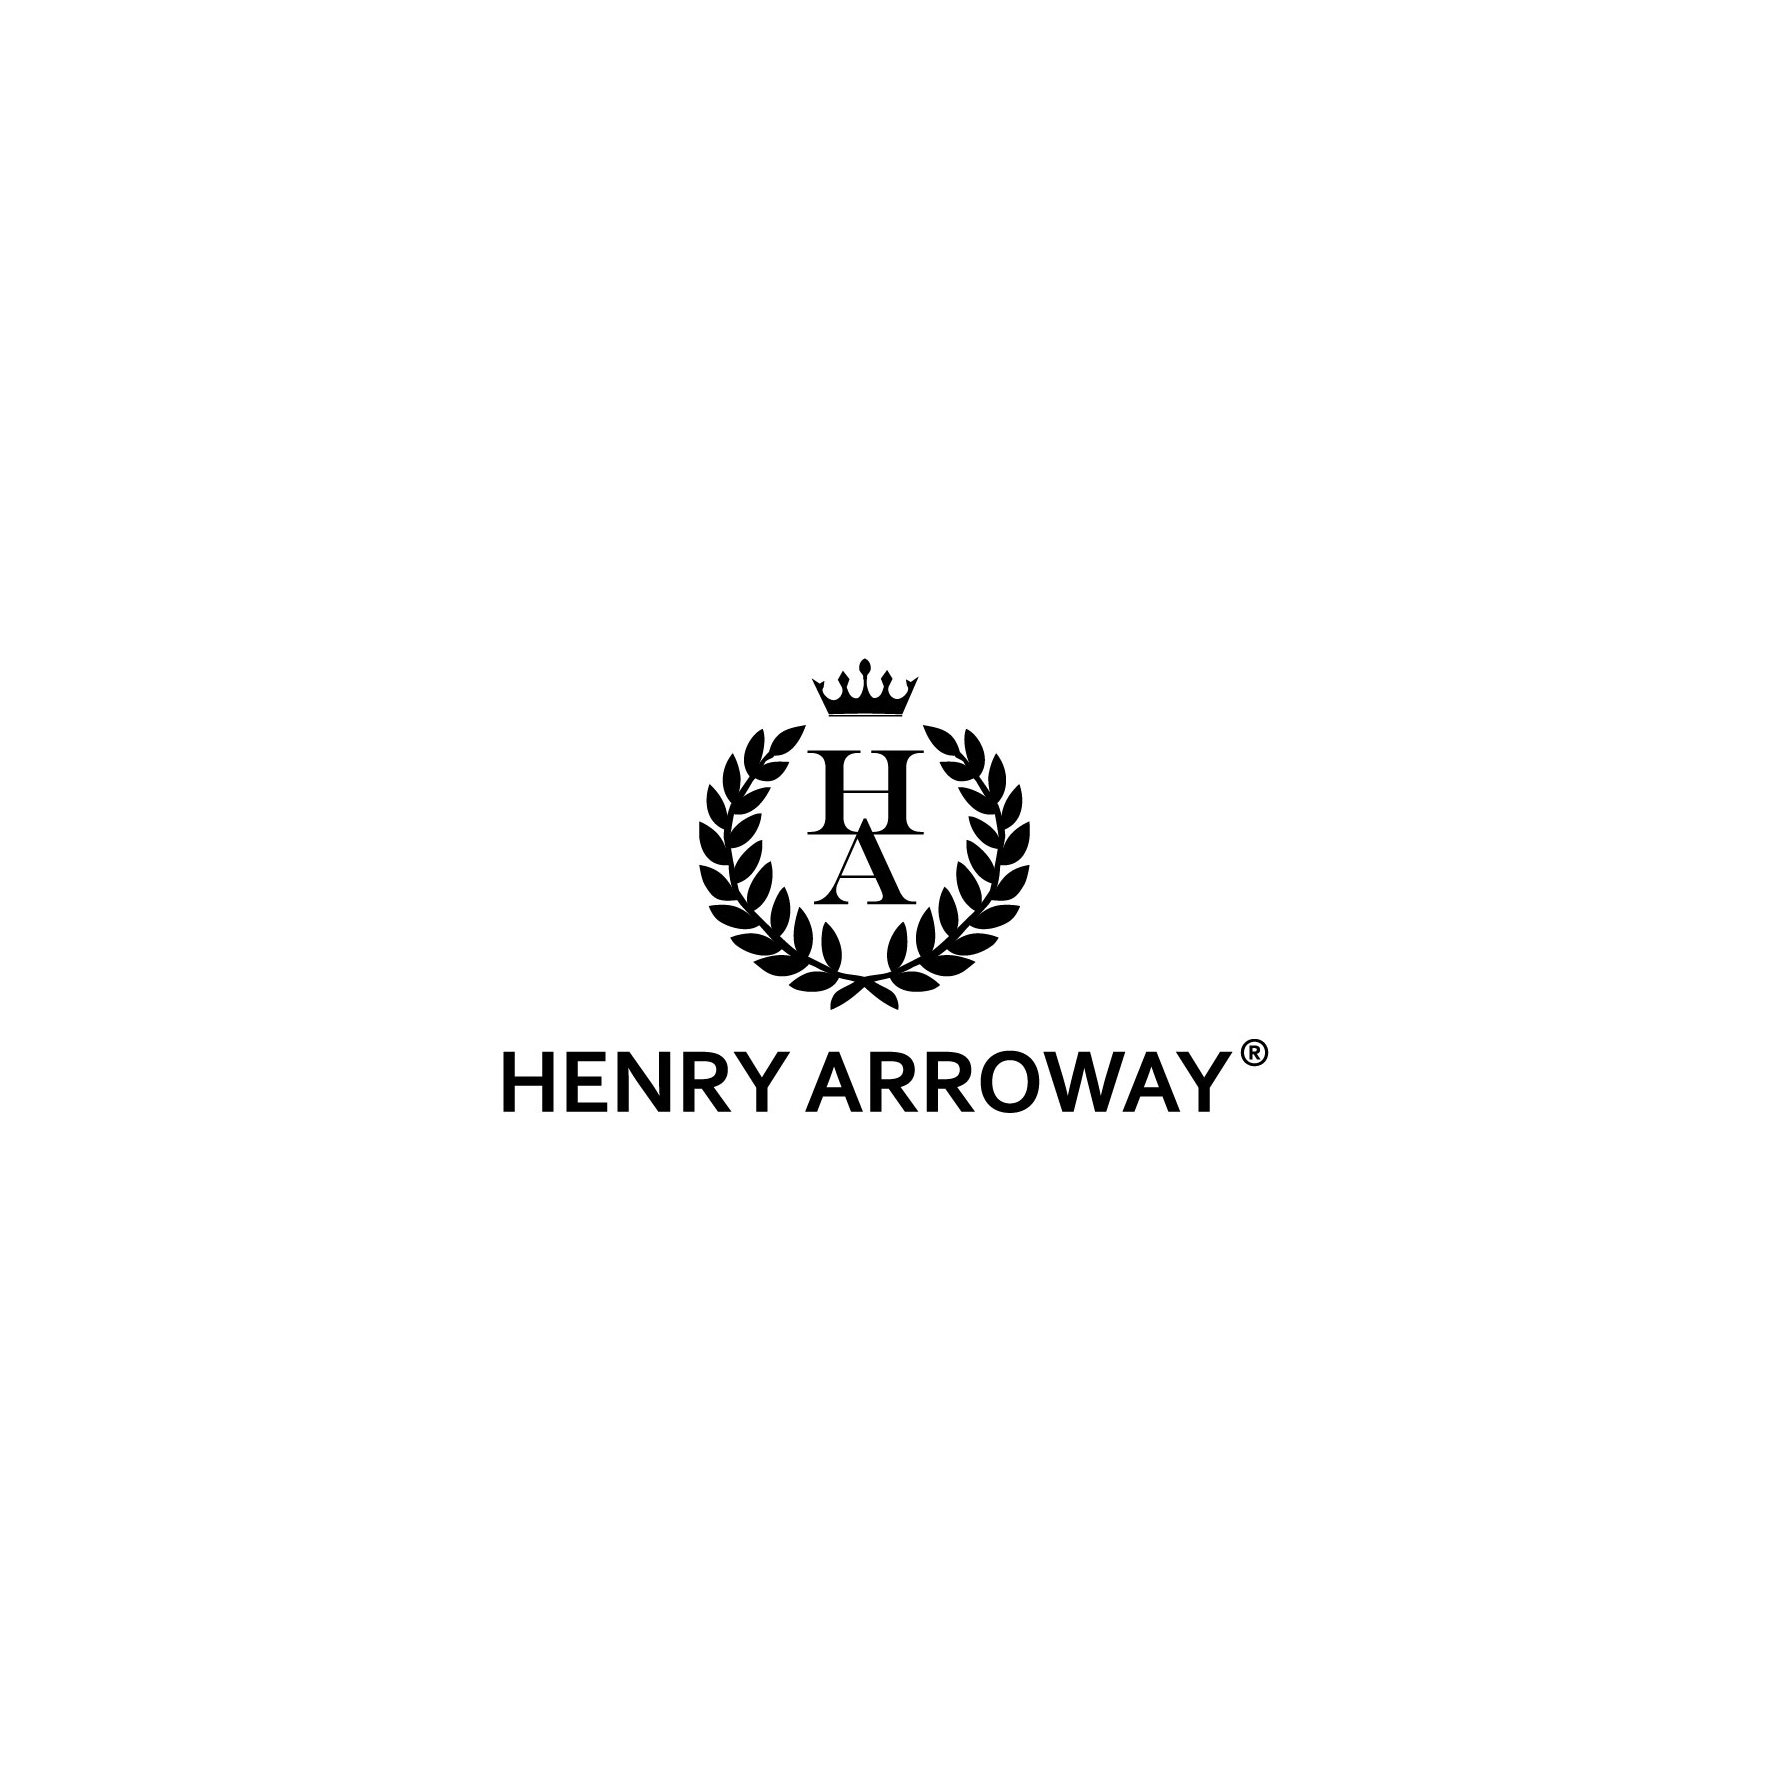 Henry Arroway